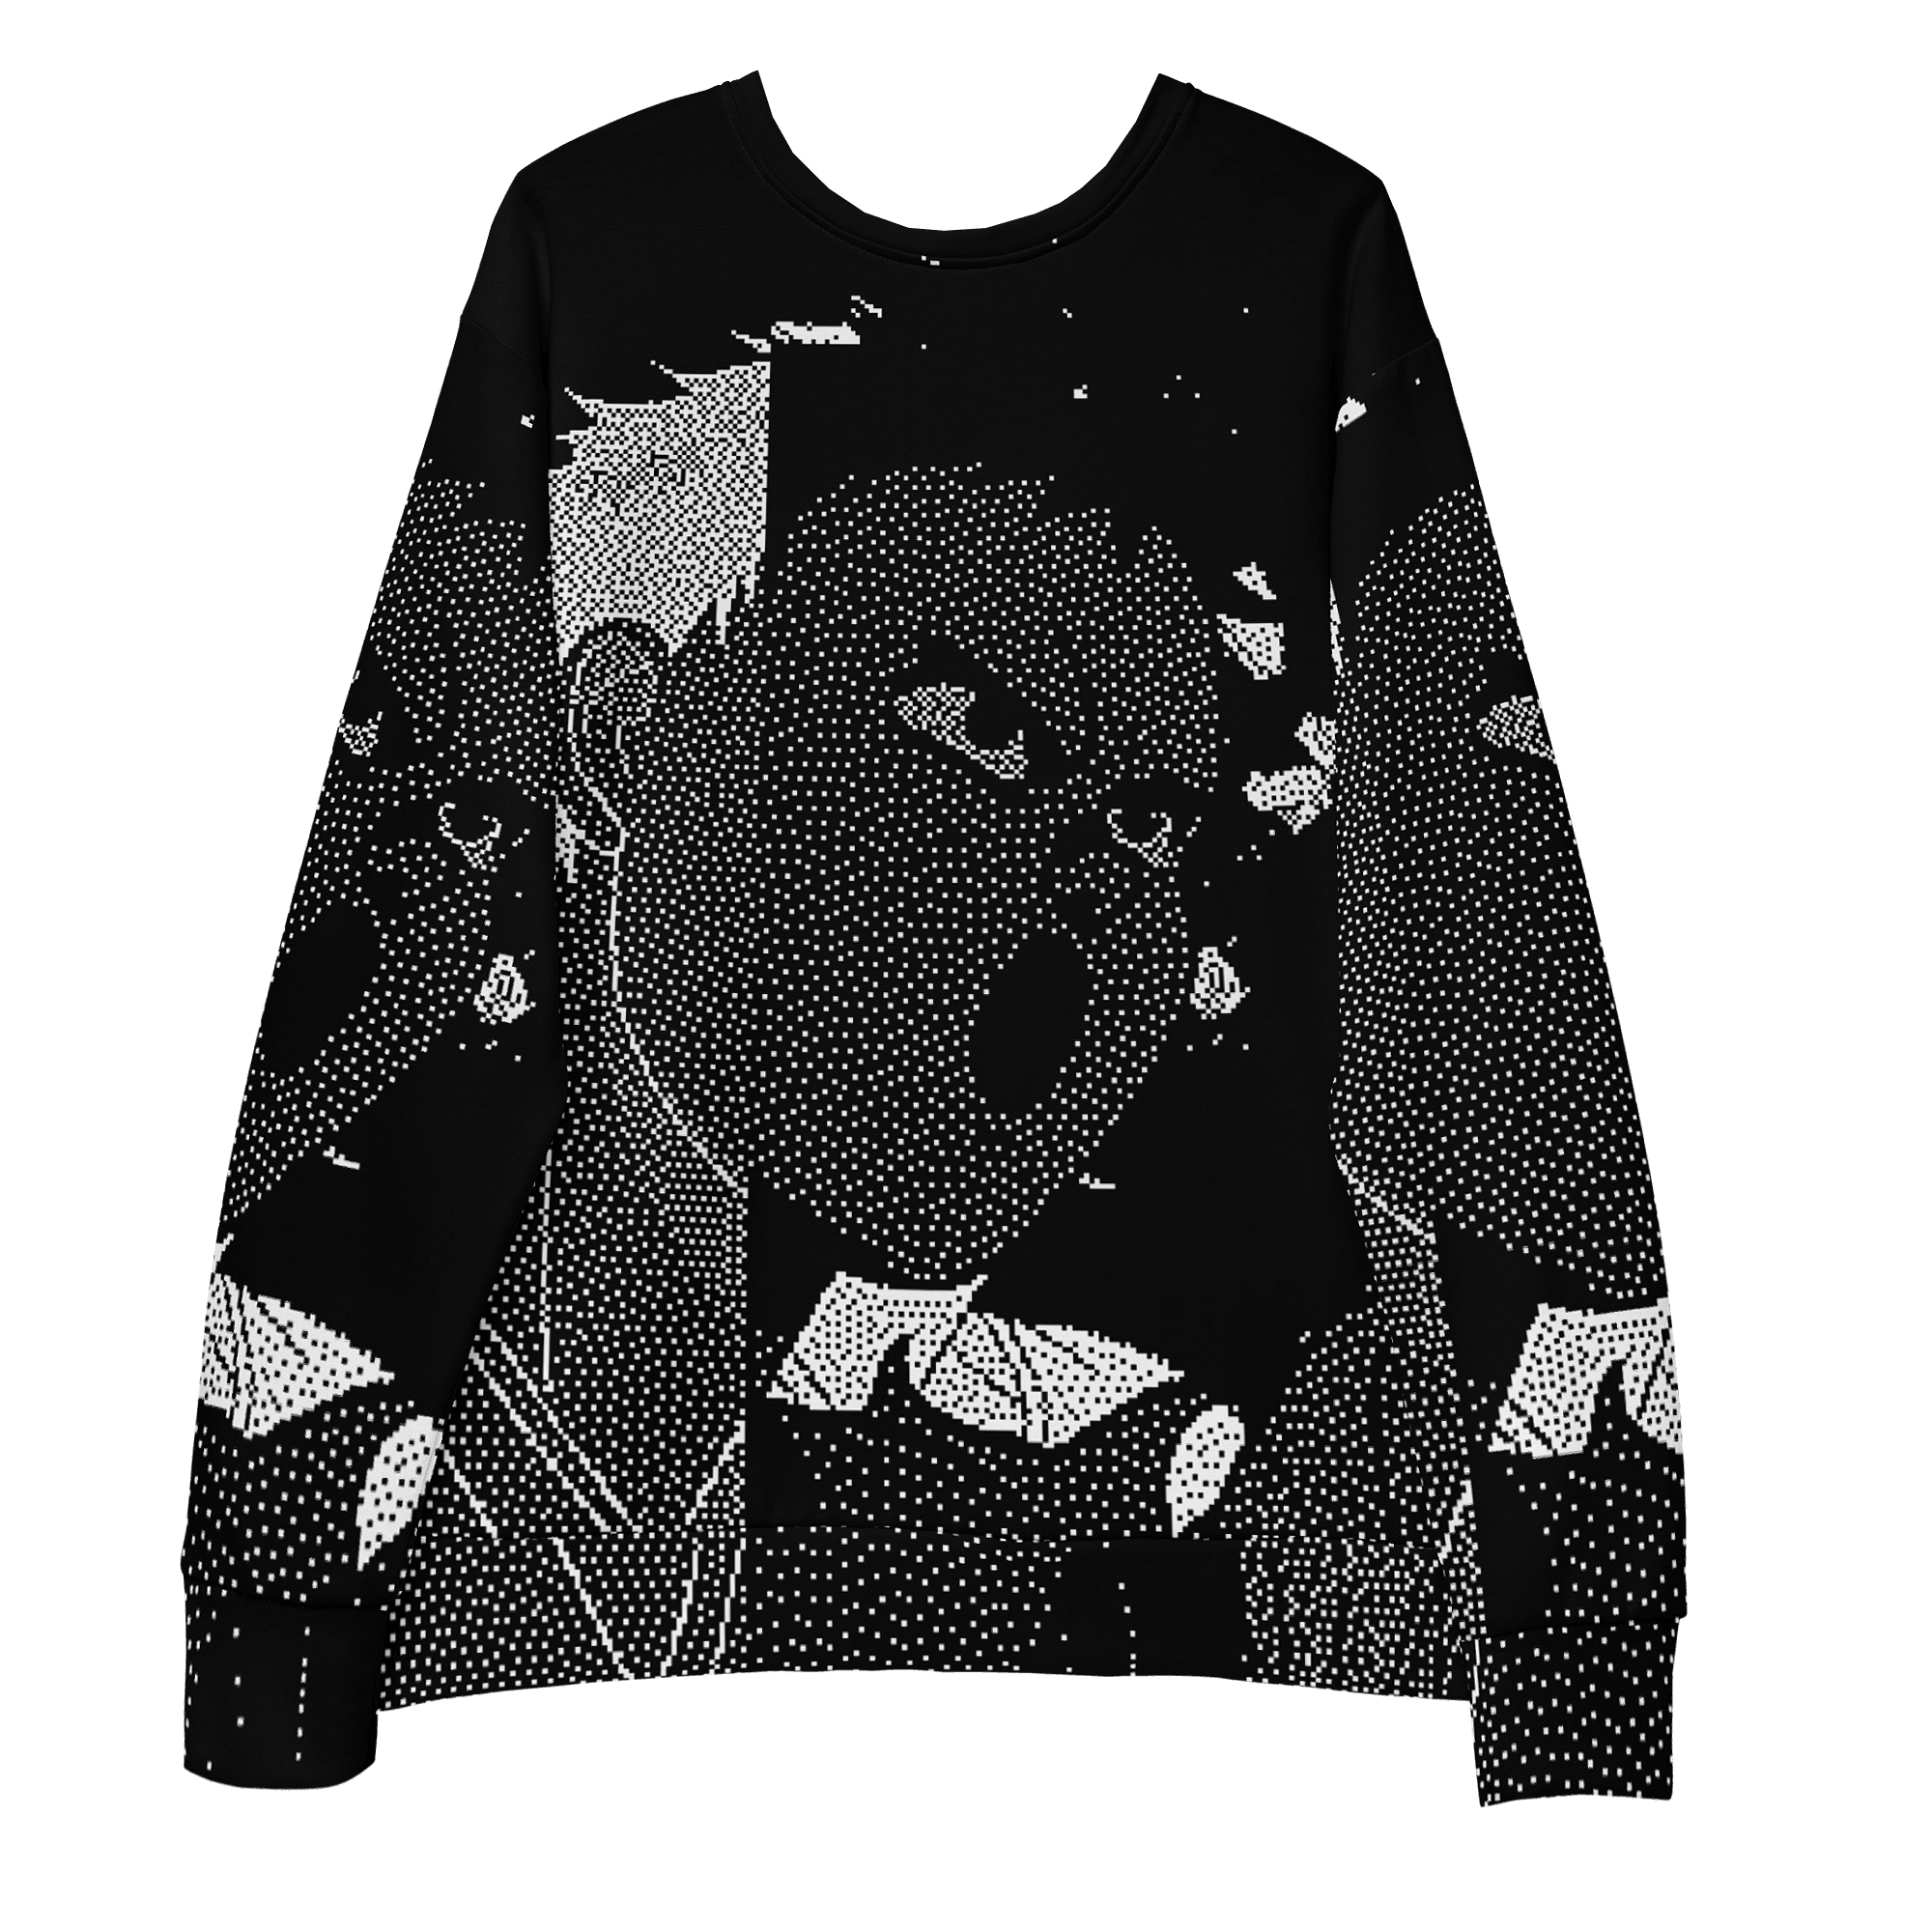 Oustet® Unisex Sweatshirt (7 pieces for sale) - Kikillo Club